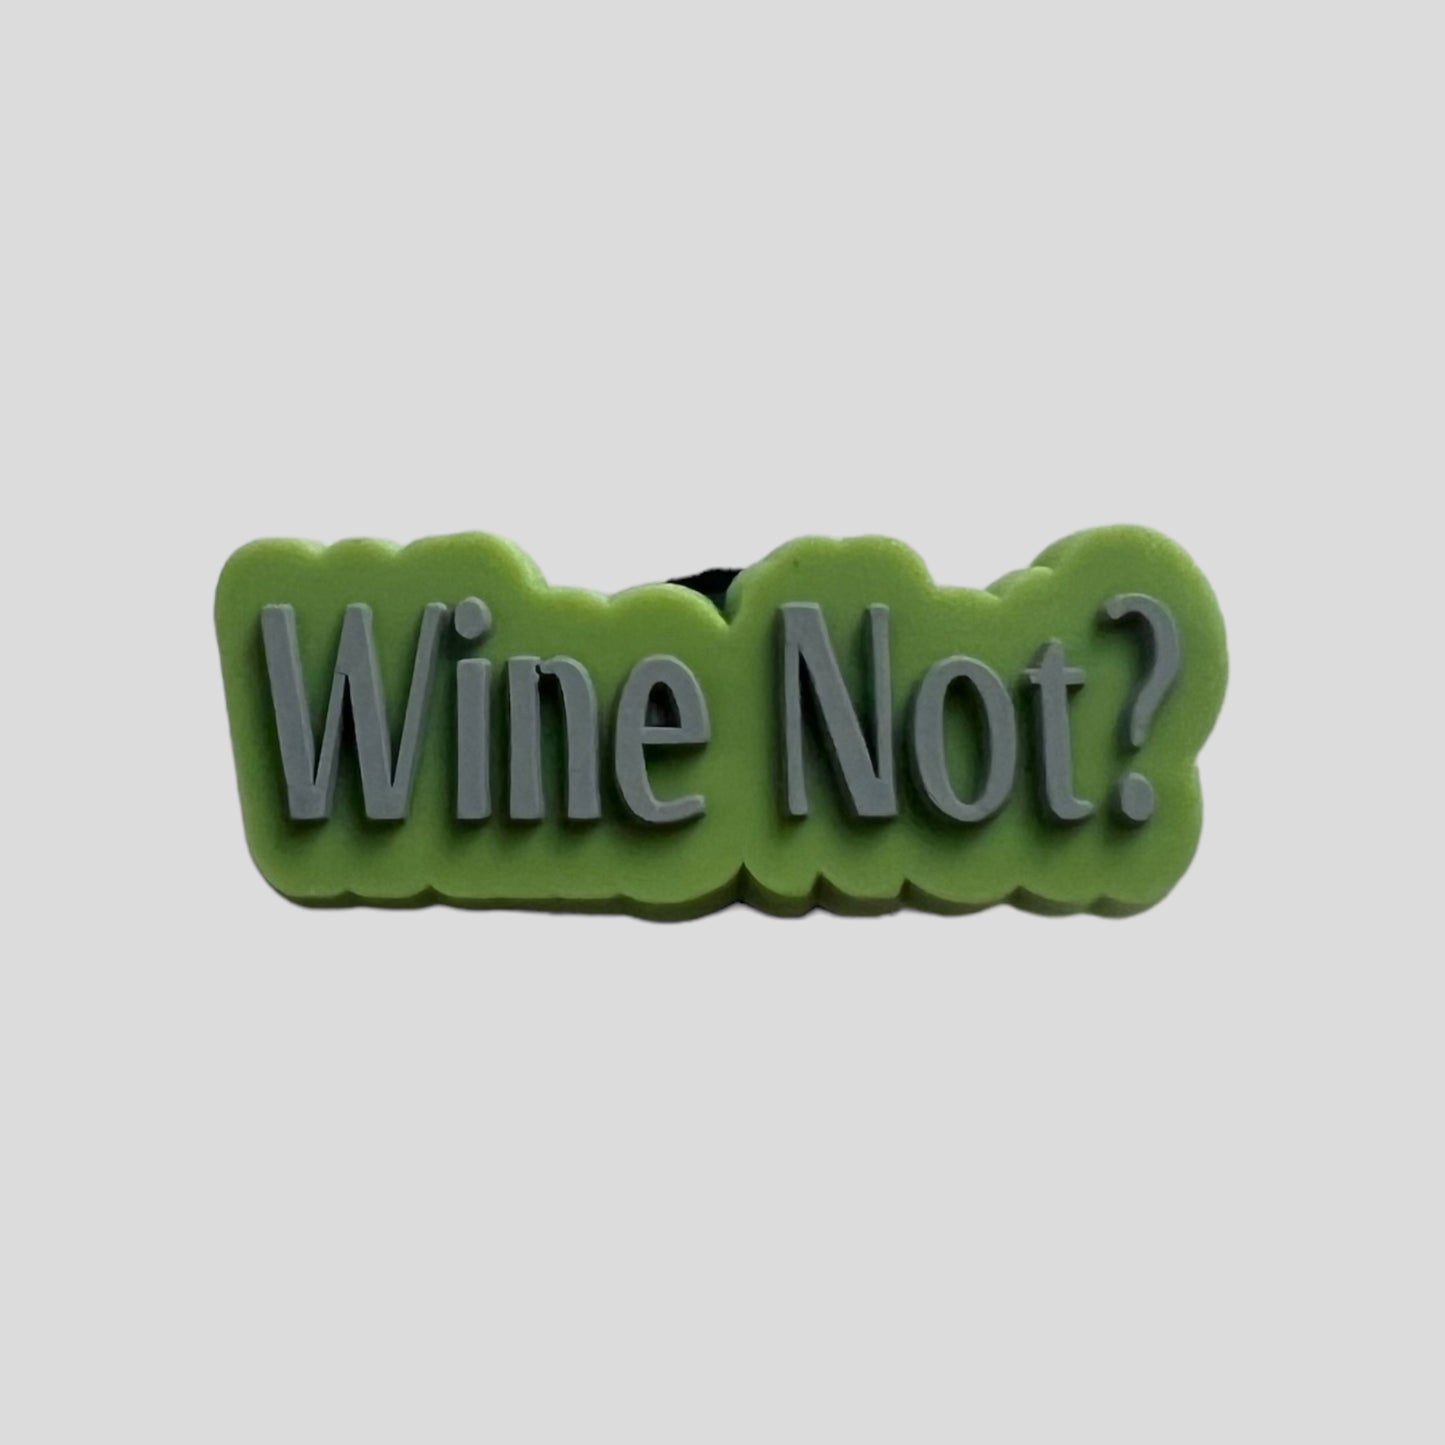 Wine Not? | Quotes